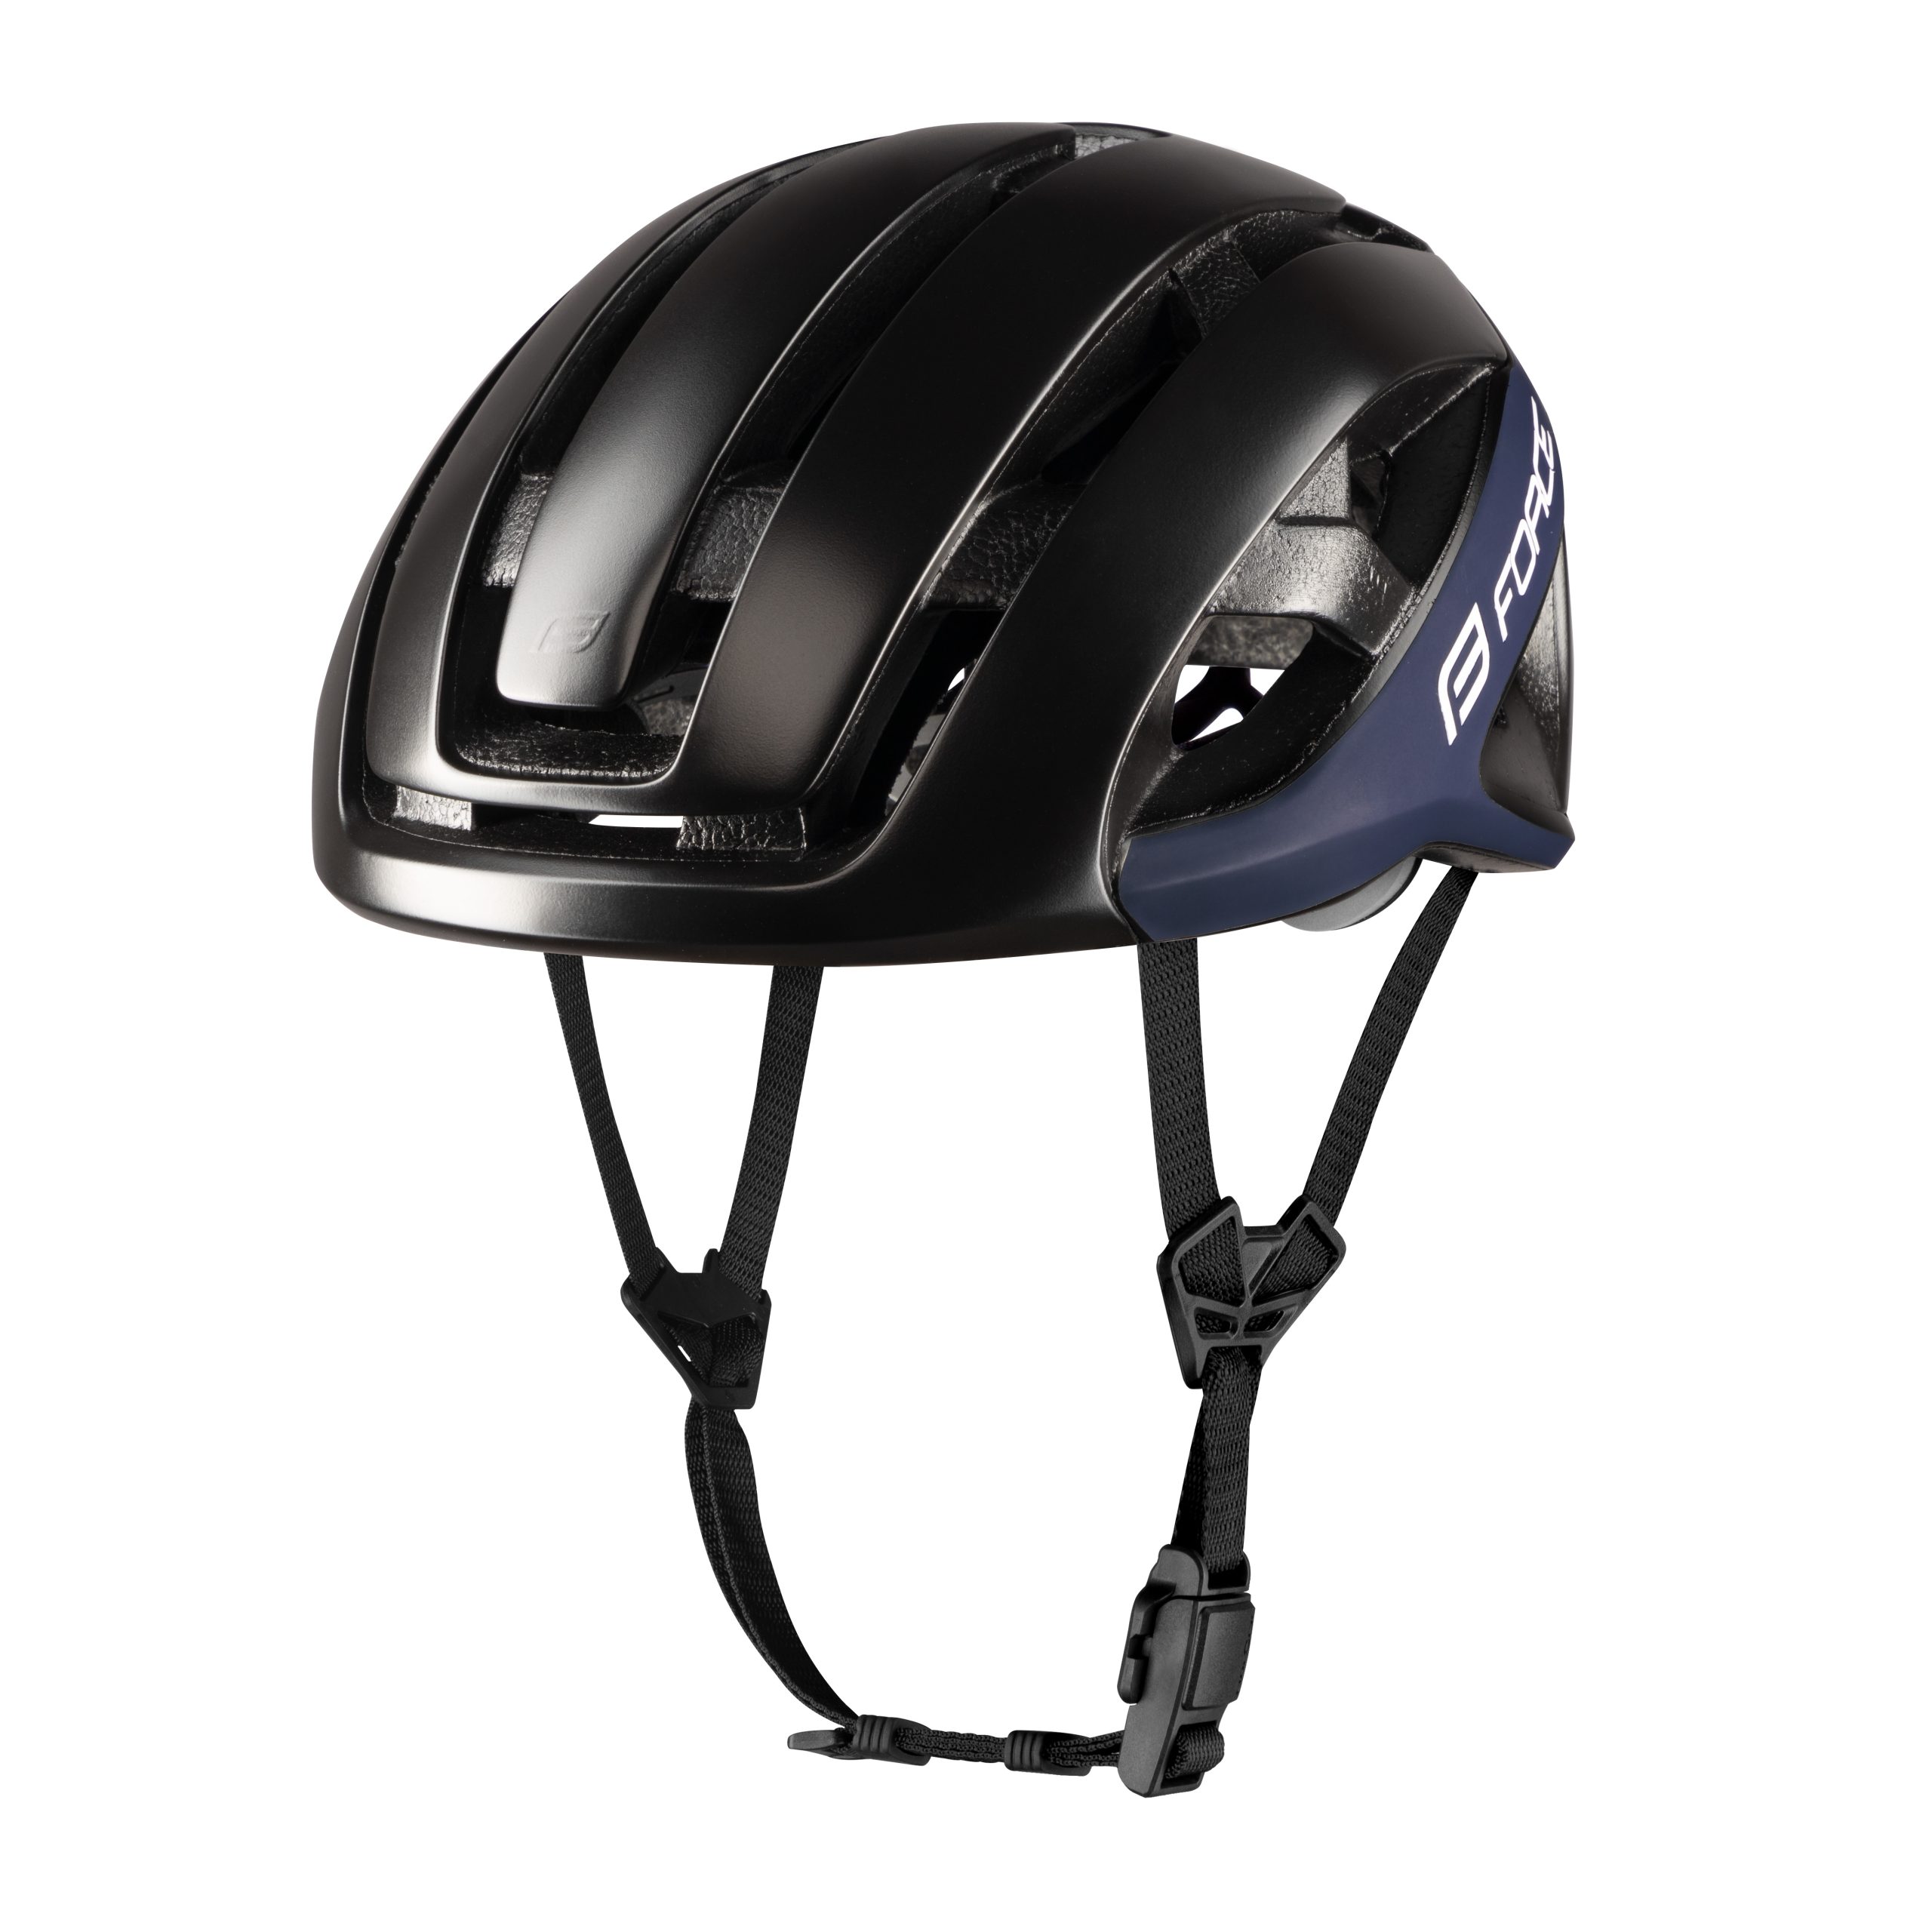 helmet-force-neo-black-blue-s-m-img-9028193_hlavni-fd-3